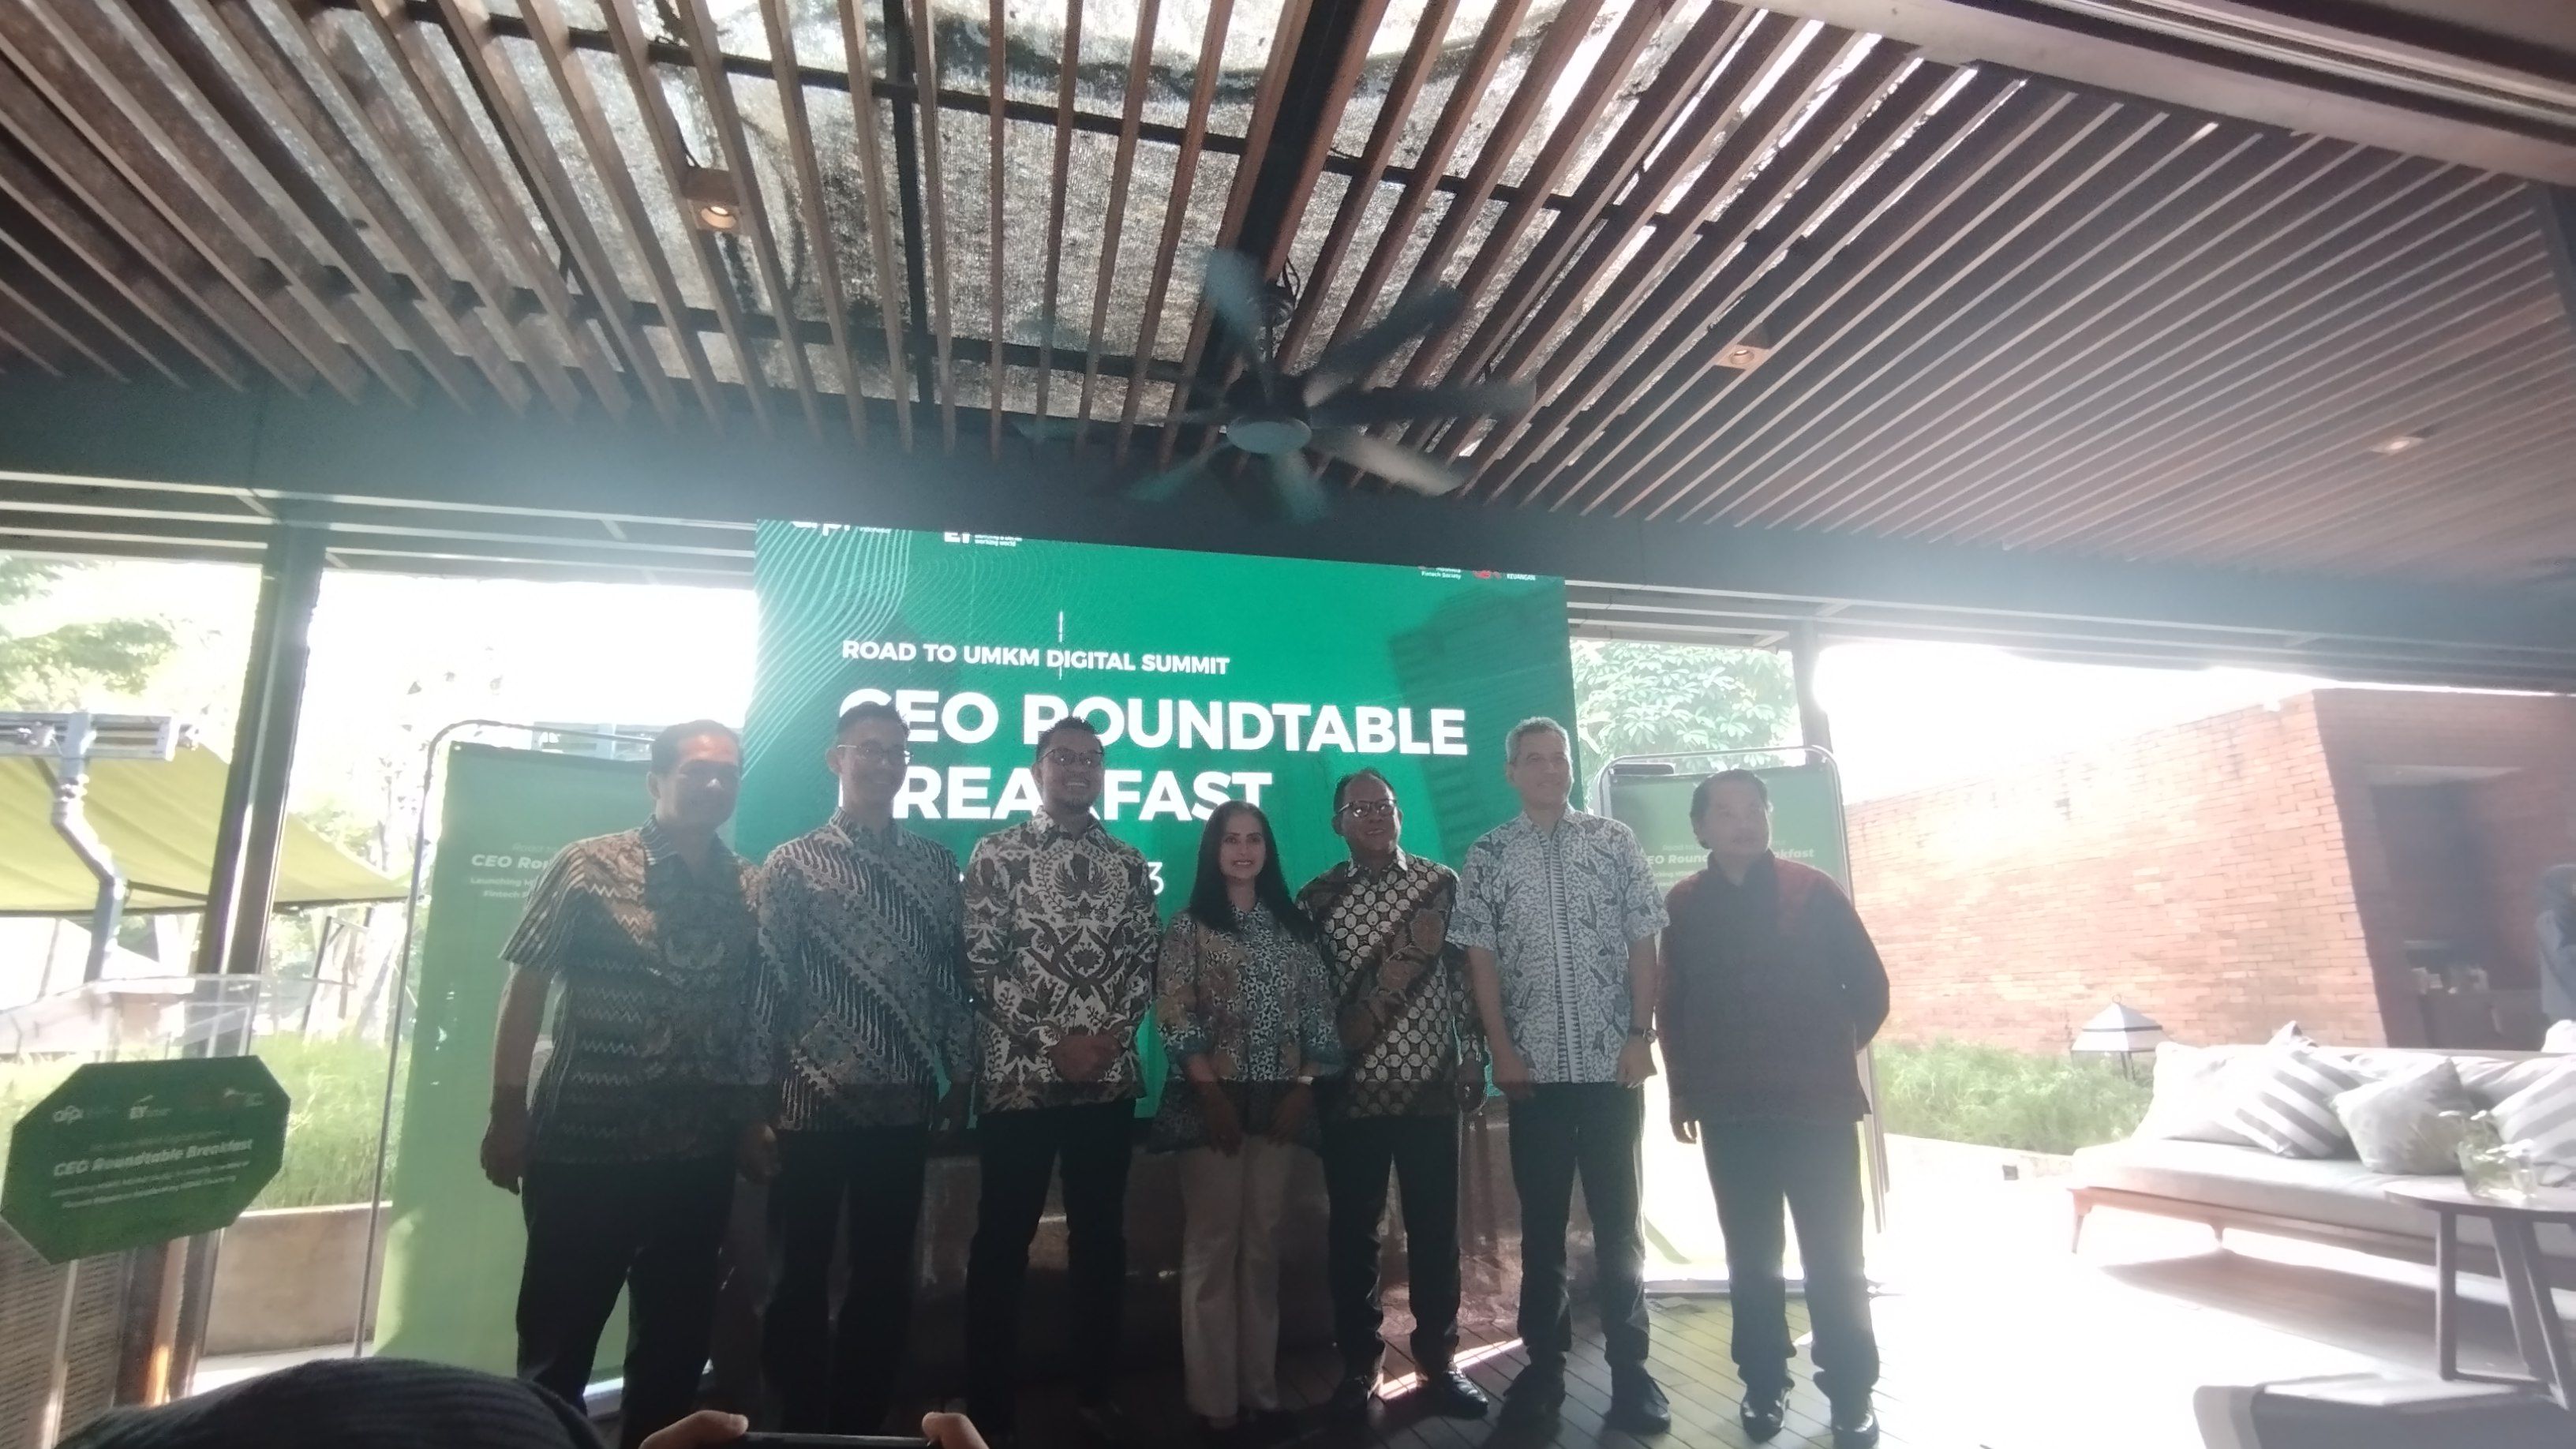 Asosiasi Fintech Pendanaan Bersama Indonesia (AFPI)